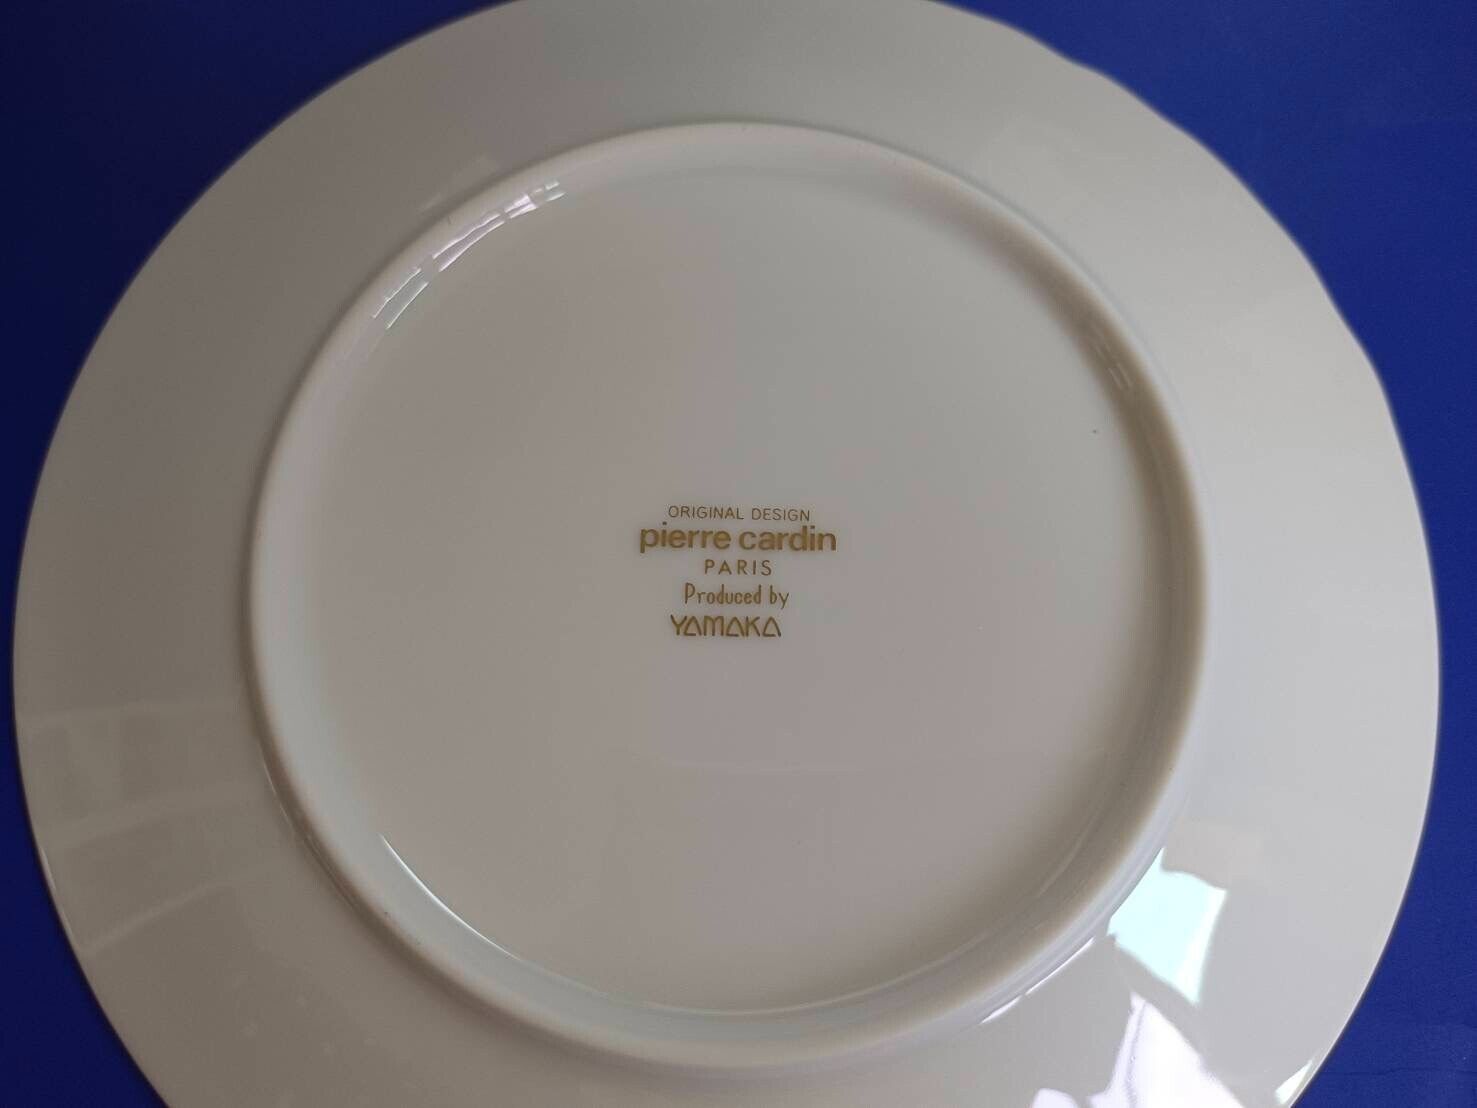 Set of 3 Luxury Pierre Cardin Dinner Plates Made by Yamaka Japan 22x22x7 cm.